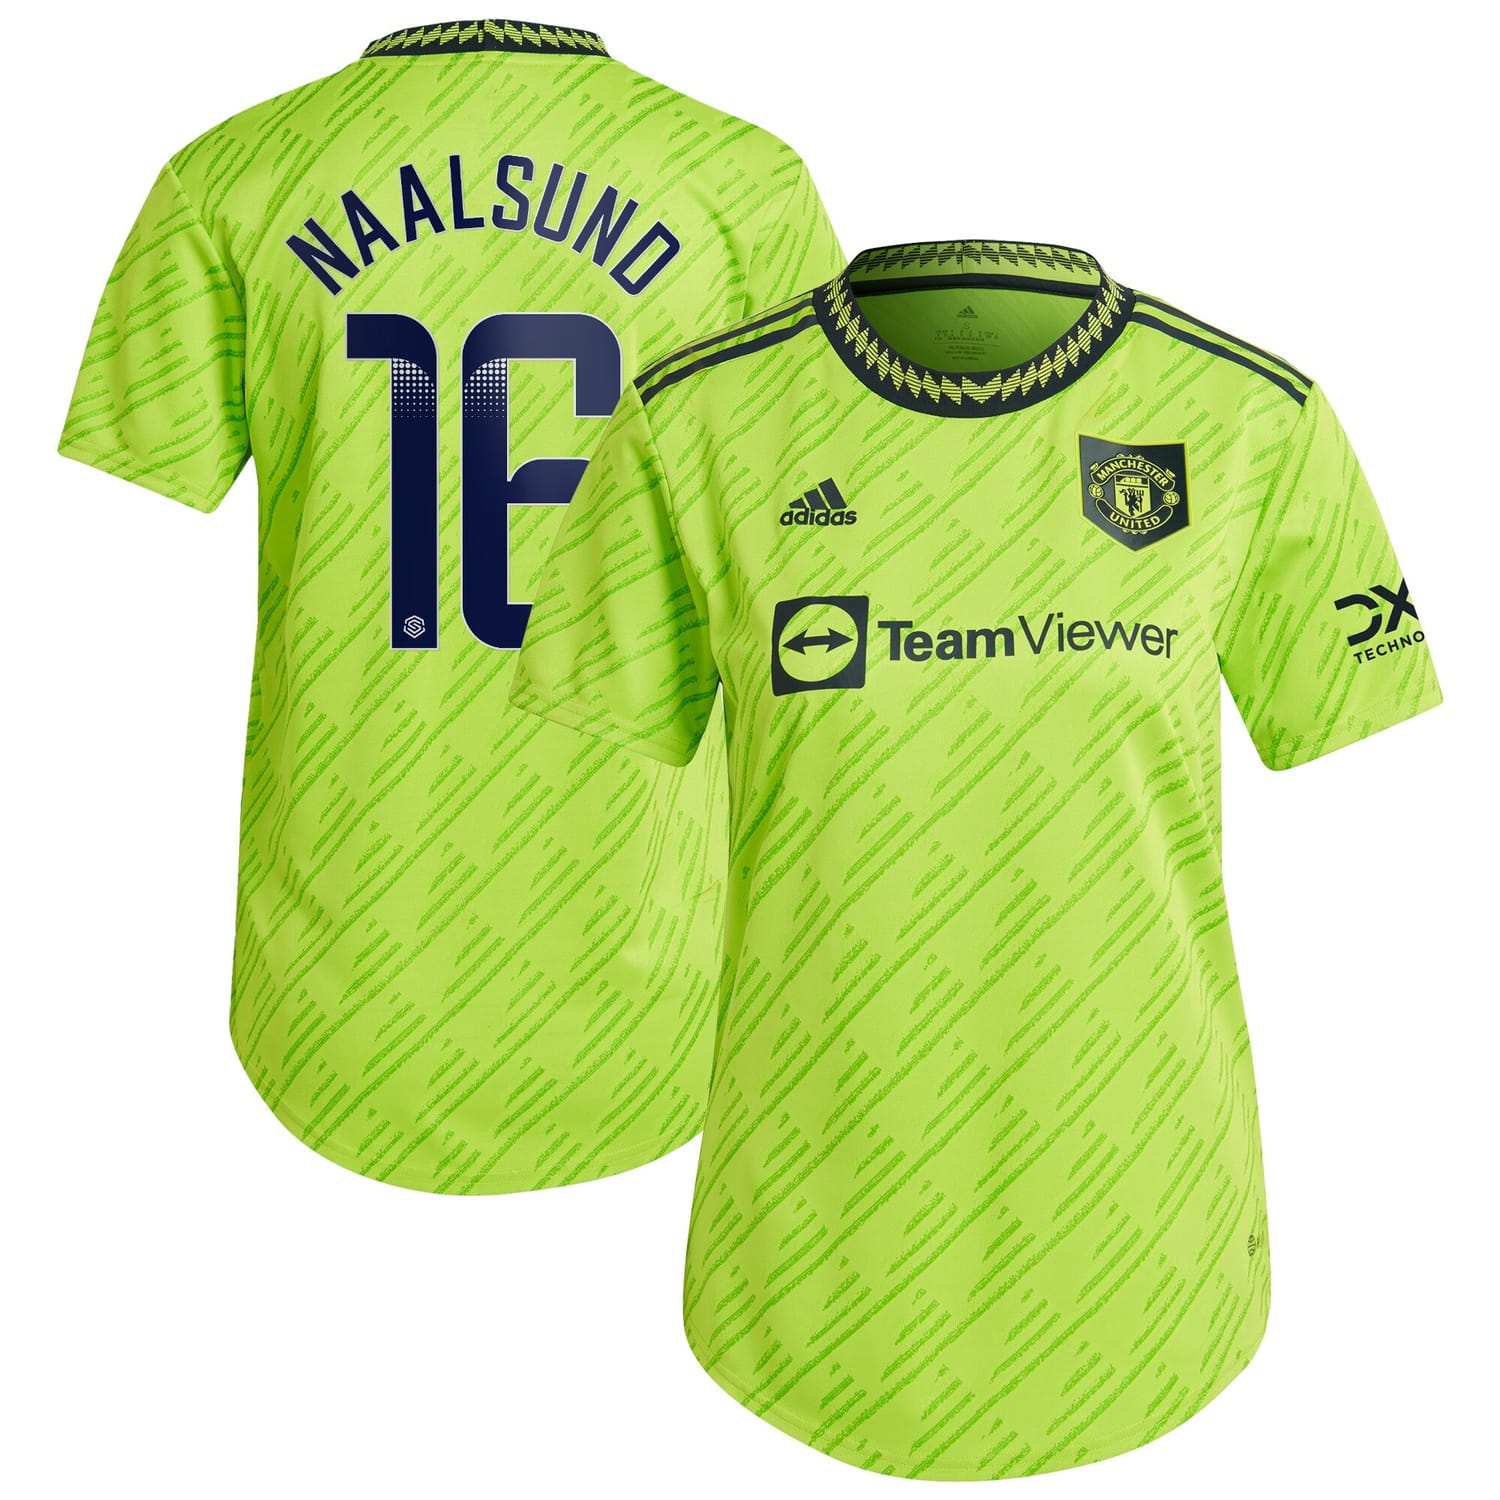 Premier League Manchester United Third WSL Jersey Shirt 2022-23 player Lisa Naalsund 16 printing for Women